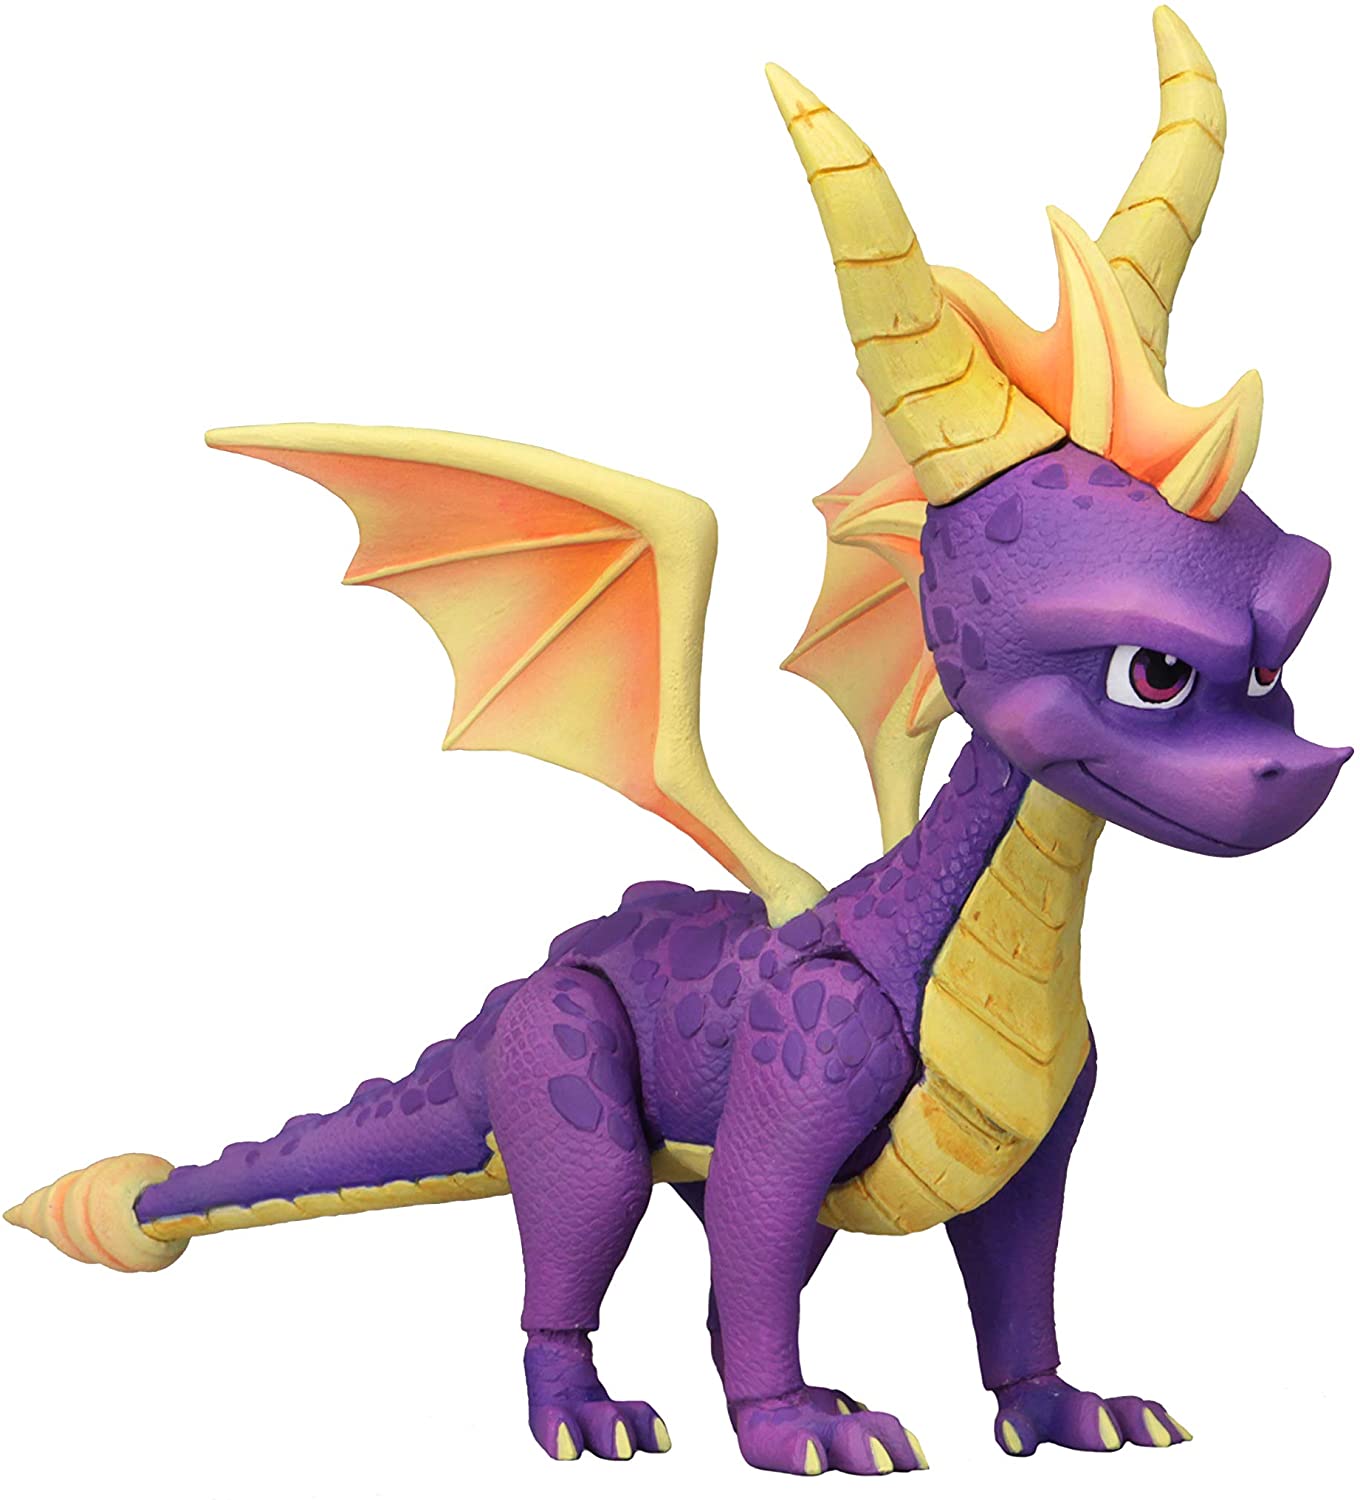 NECA 7 Inch Action Figure - Spyro The Dragon